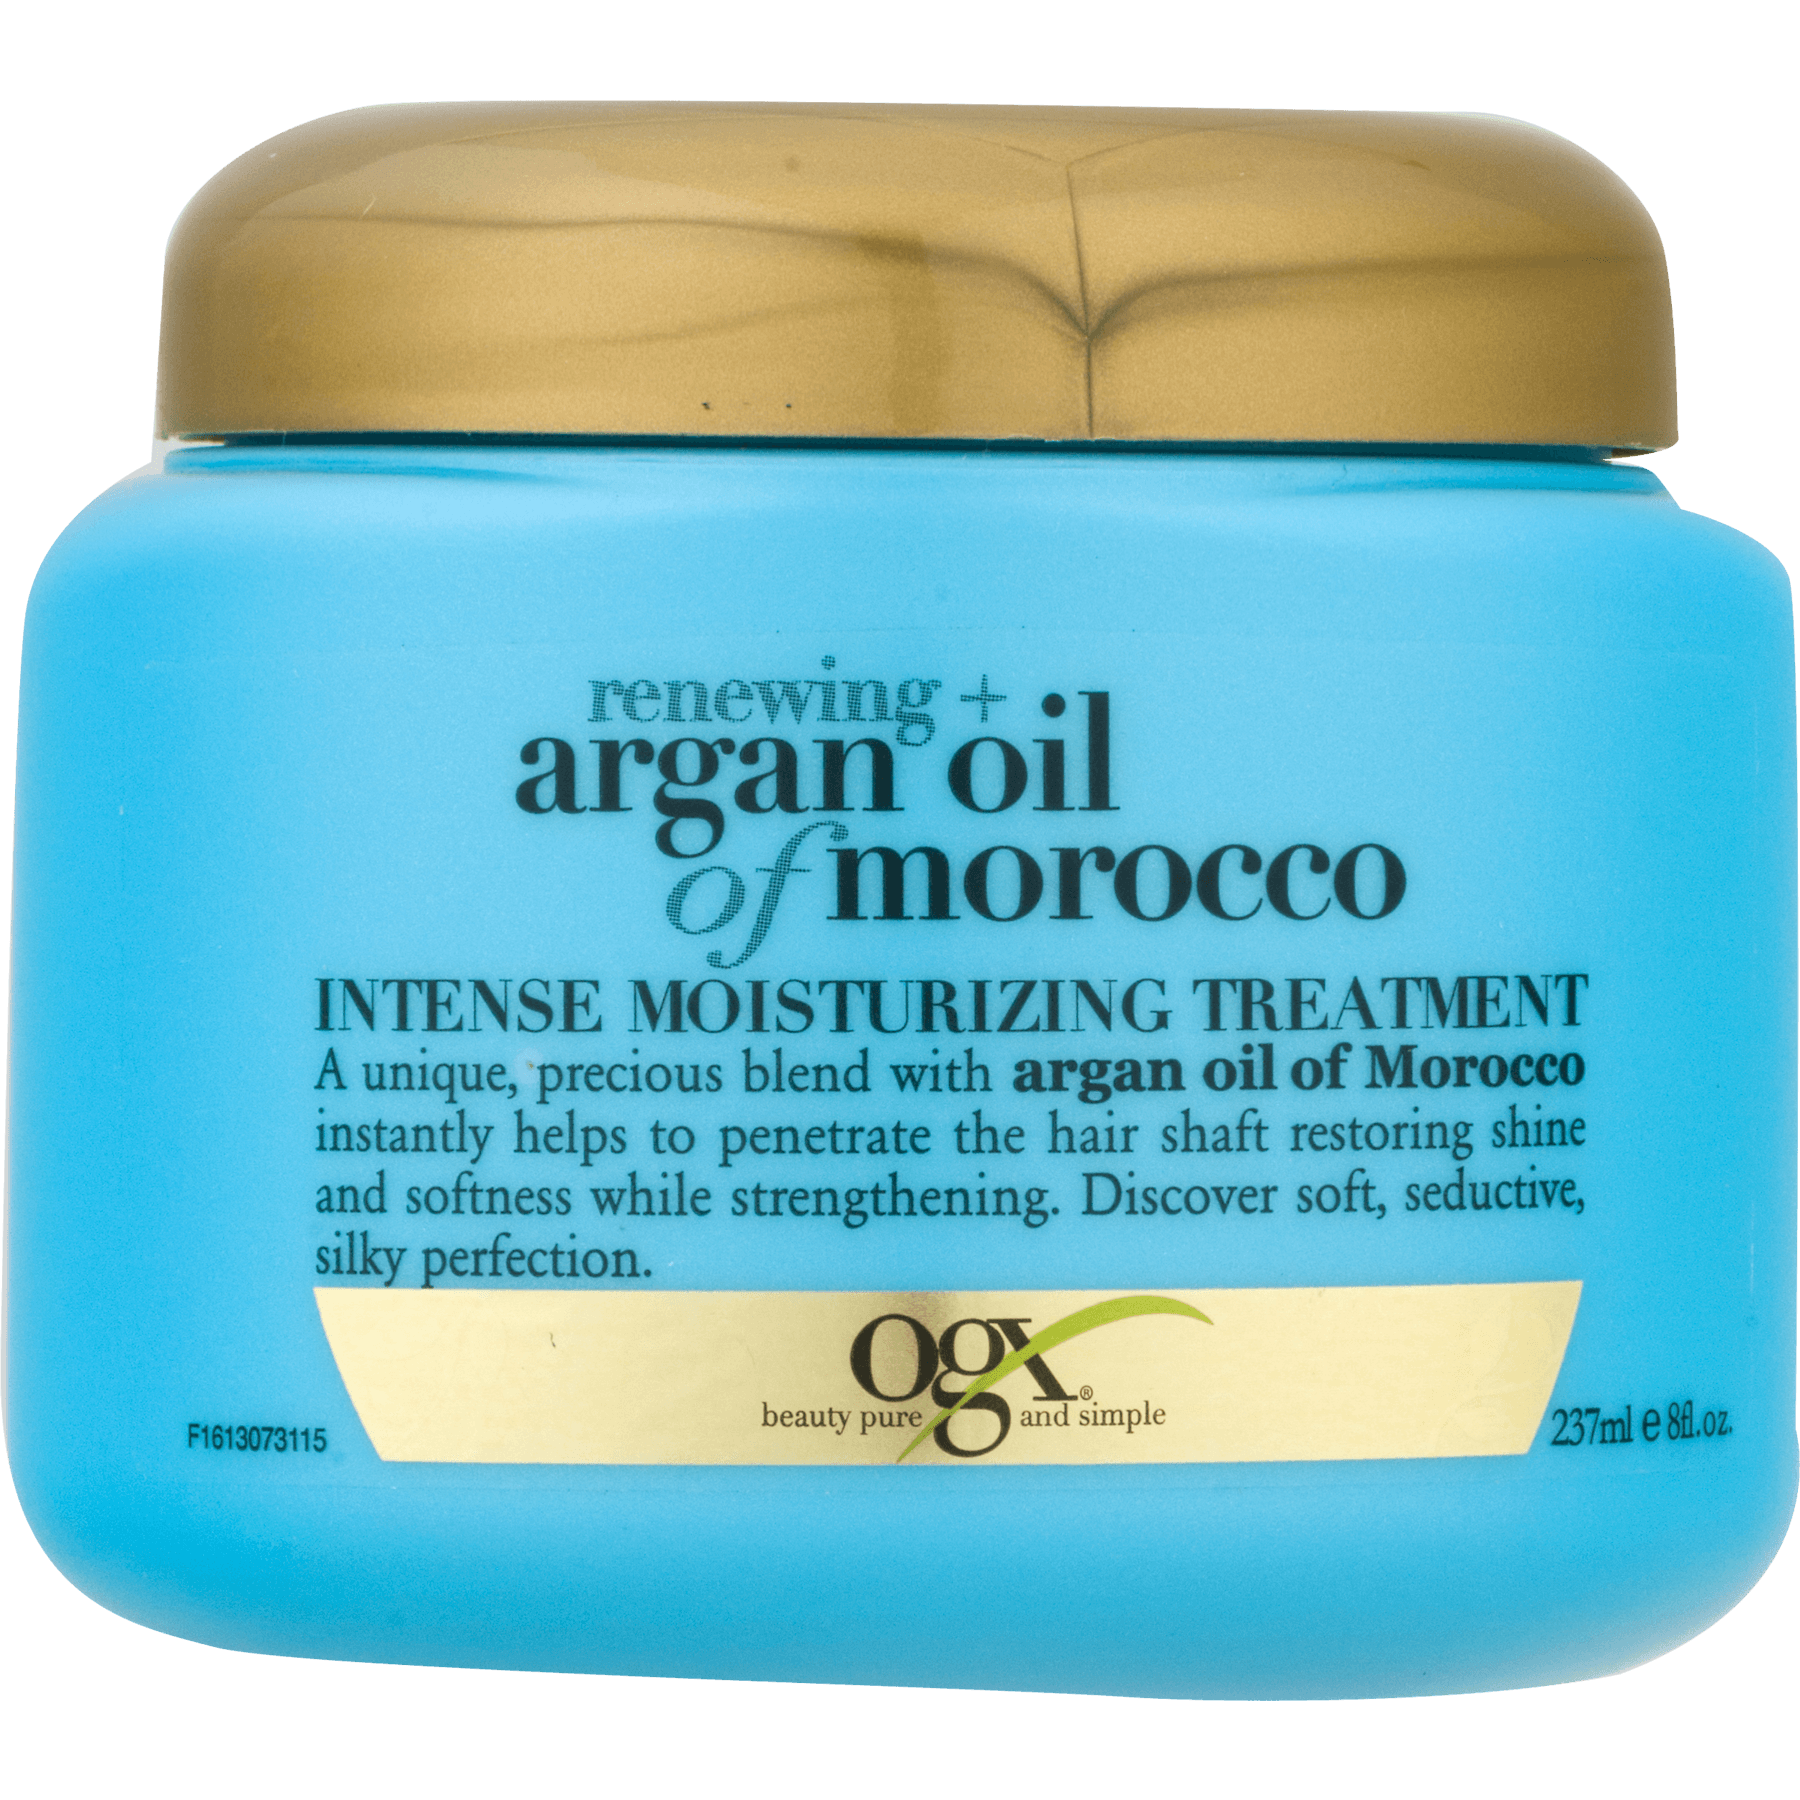 OGX Renewing Argan Oil of Morocco Intense Moisturizing Treatment, 8 oz - image 4 of 6